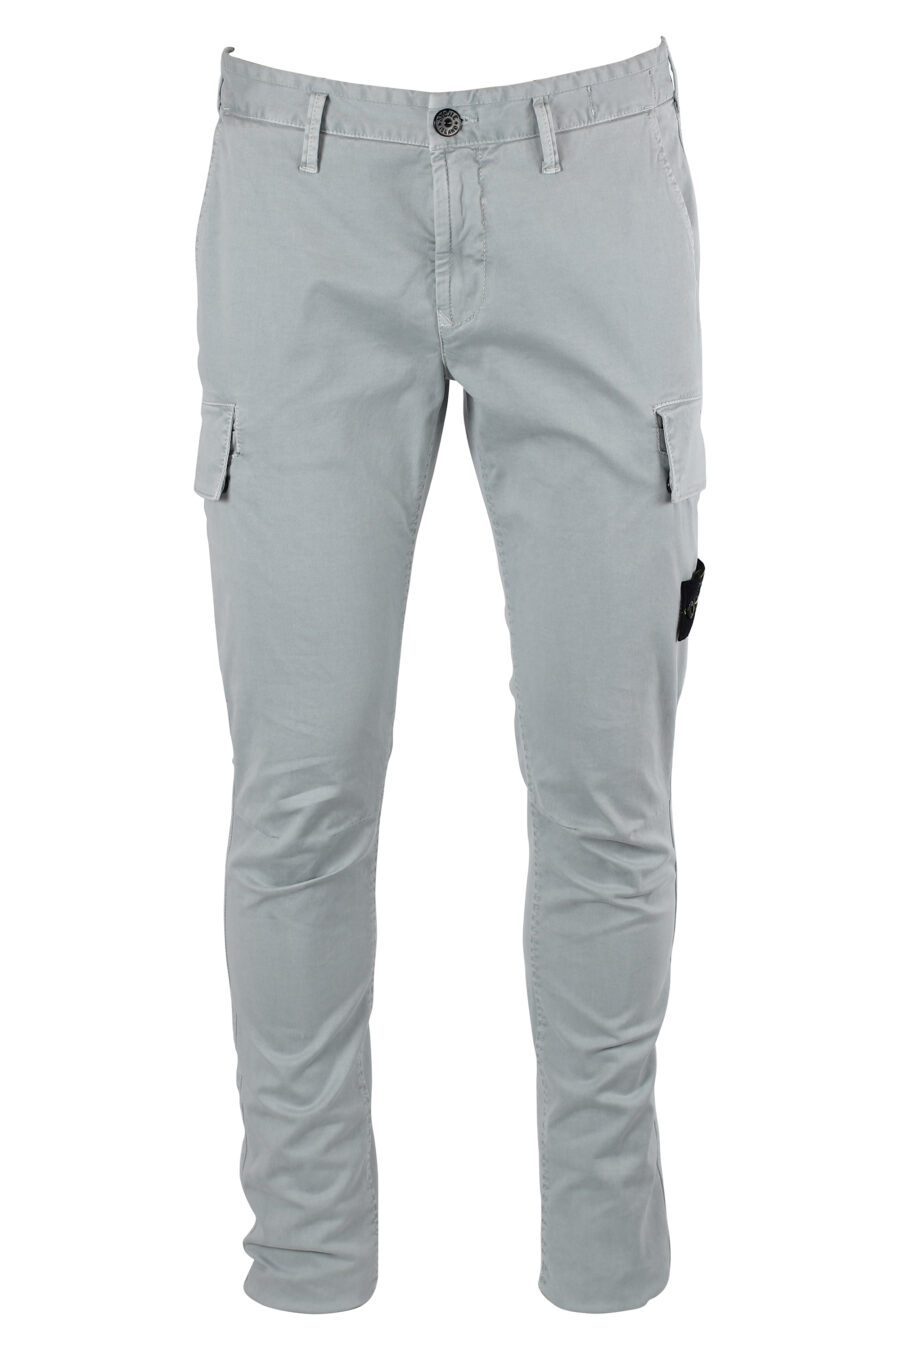 Pantalón gris claro con bolsillos y parche lateral - IMG 8332